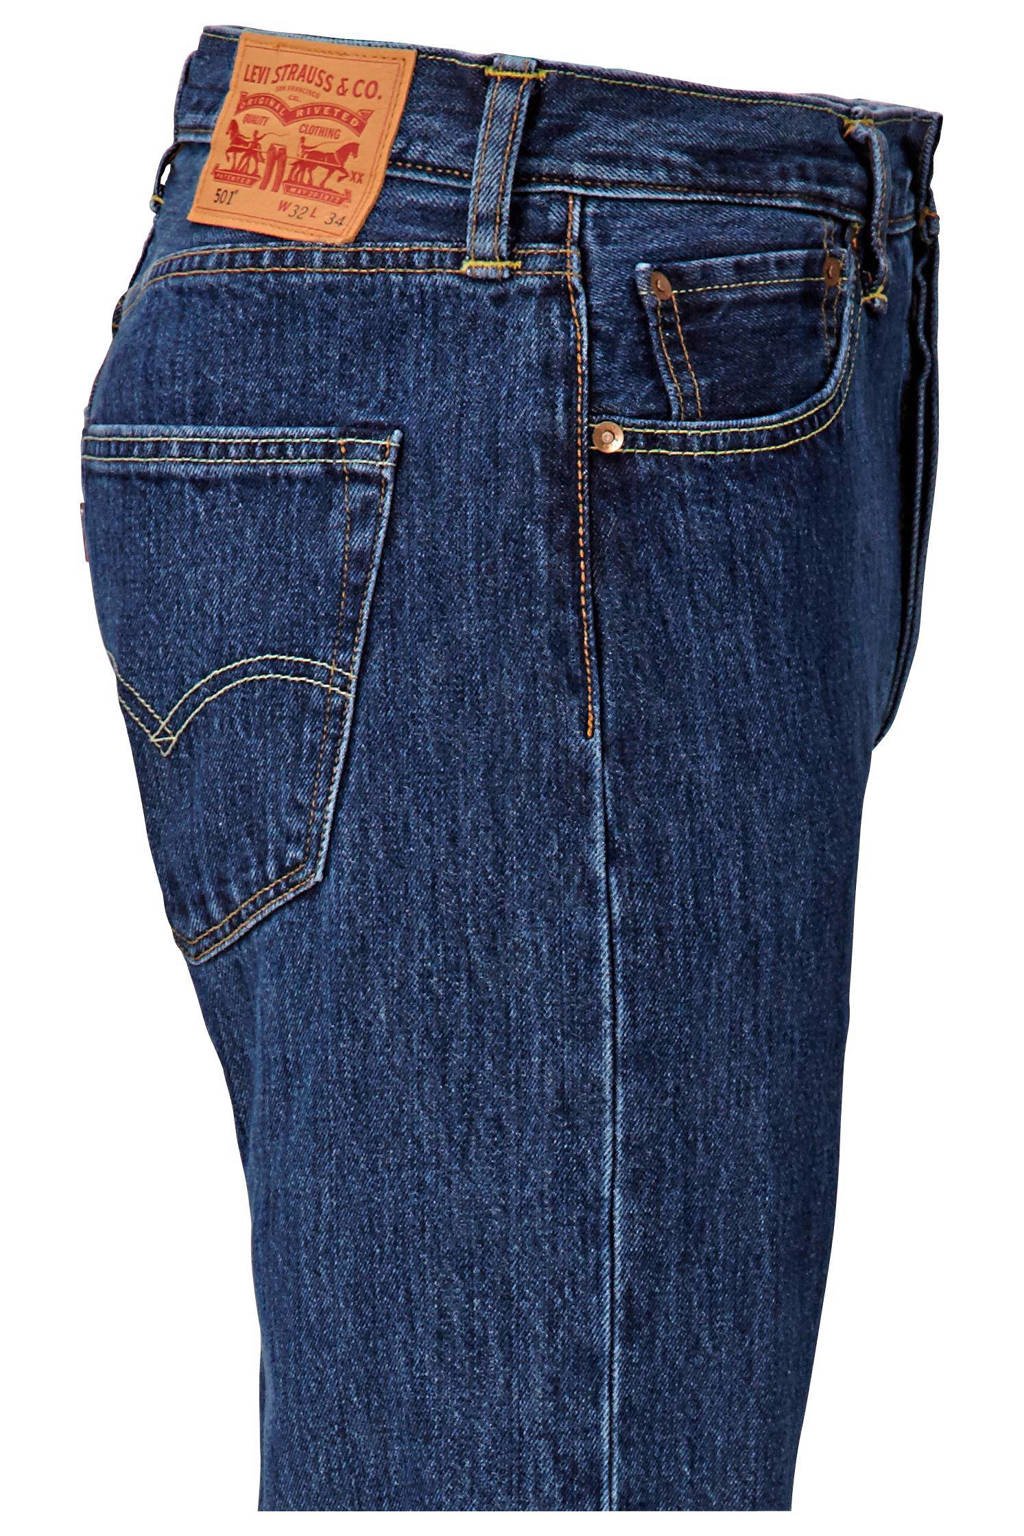 tragedie Berg Vesuvius bloemblad Levi's 501 regular fit jeans stone wash | wehkamp